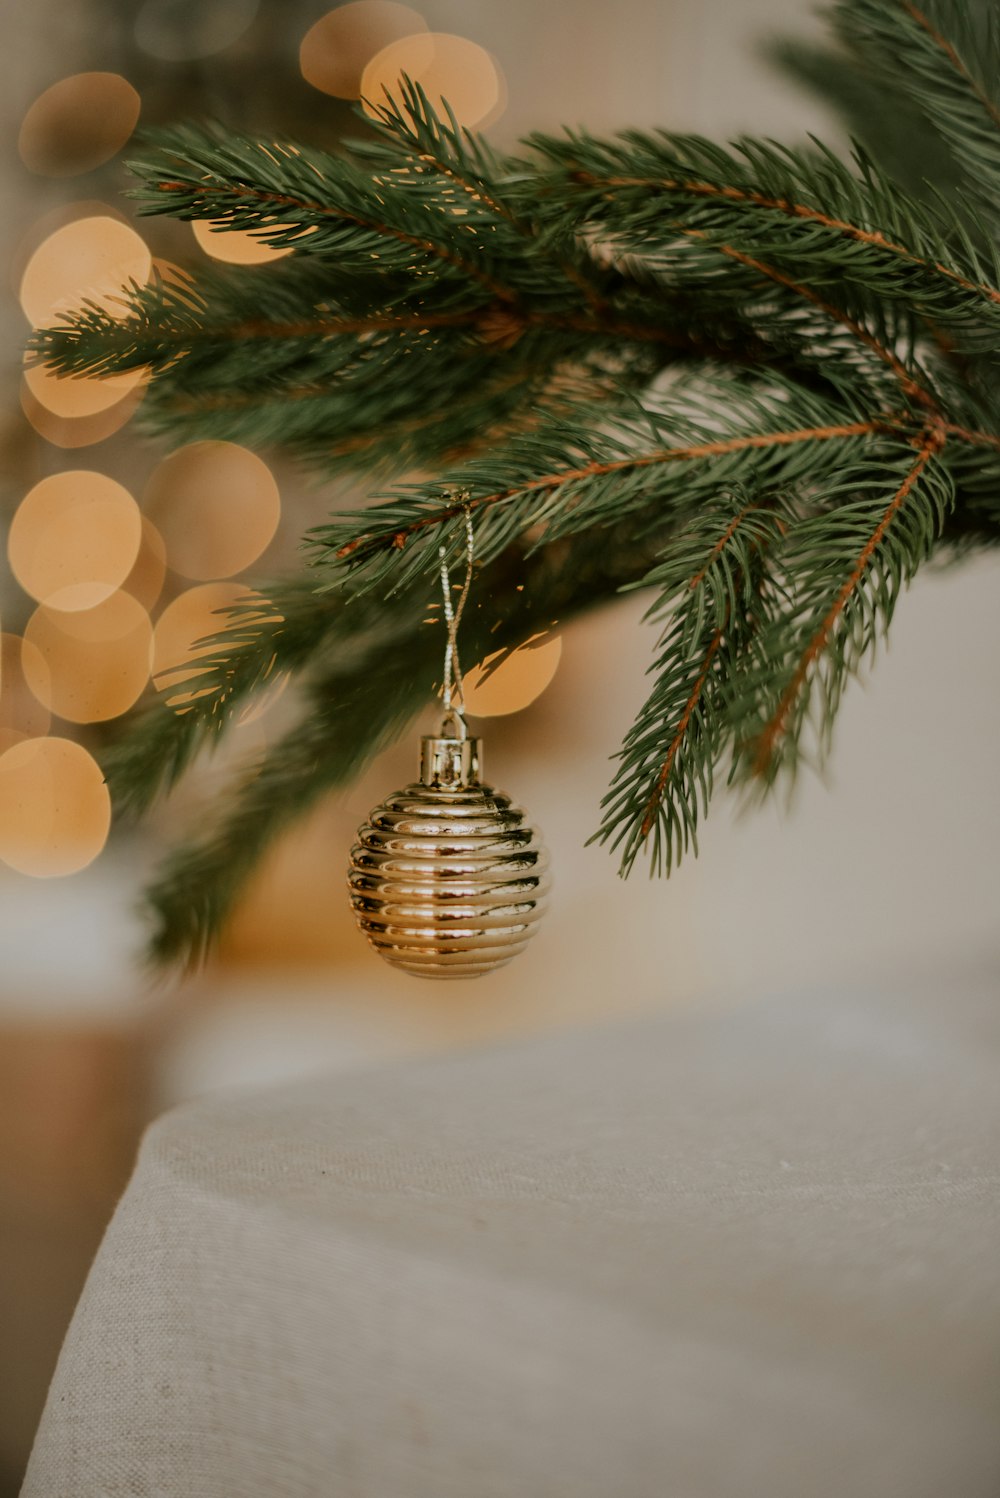 Un ornement de Noël suspendu à un pin